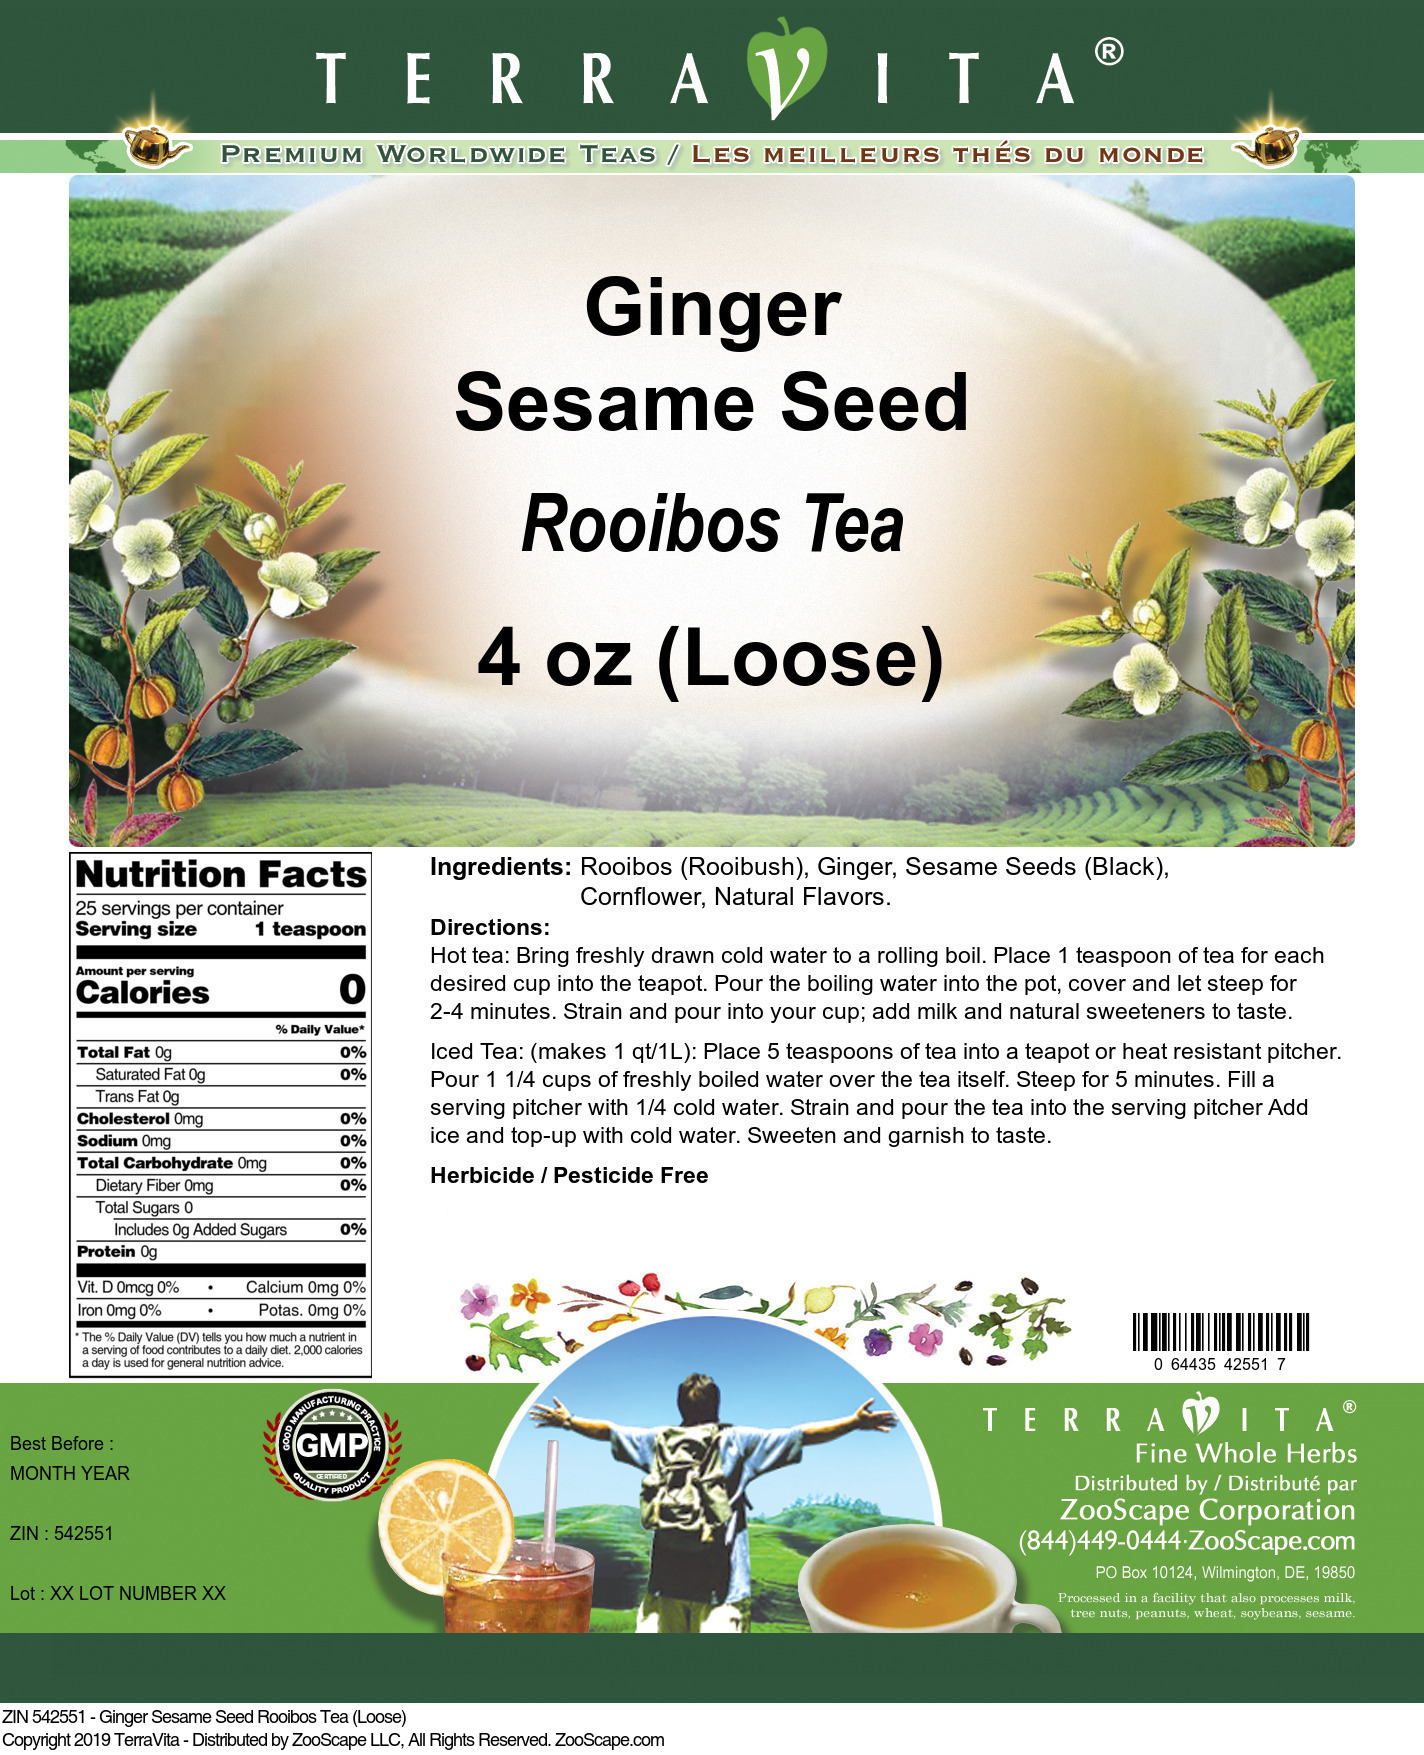 Ginger Sesame Seed Rooibos Tea (Loose) - Label